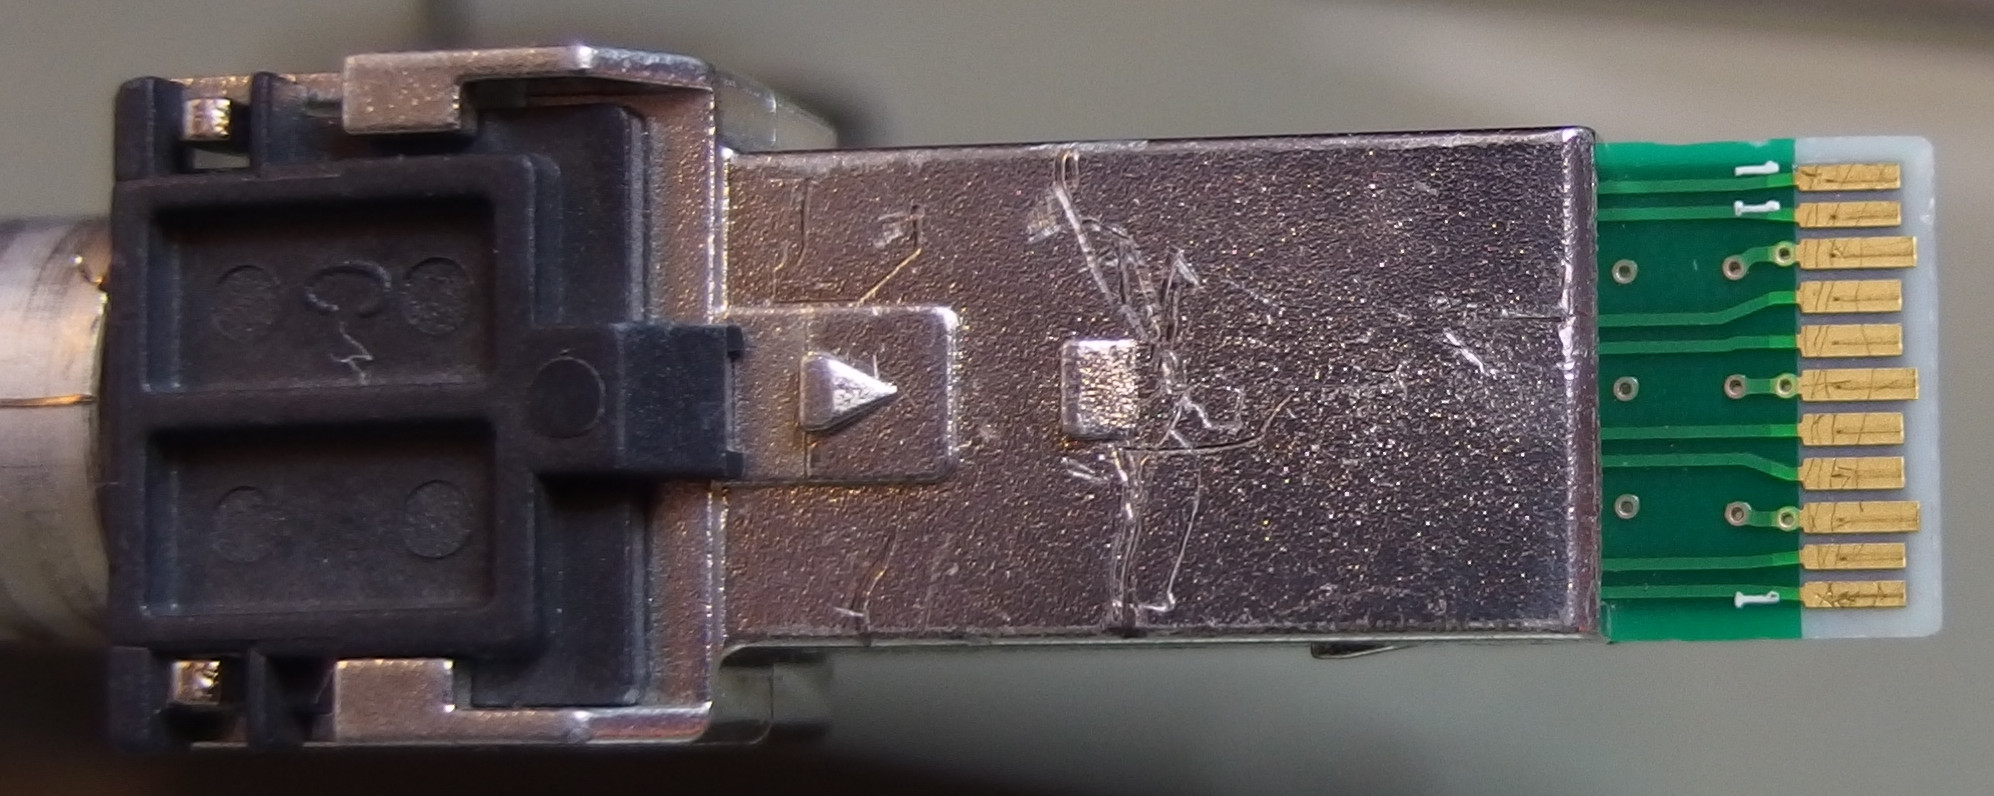 HSIO bottom side (pins 1-11)